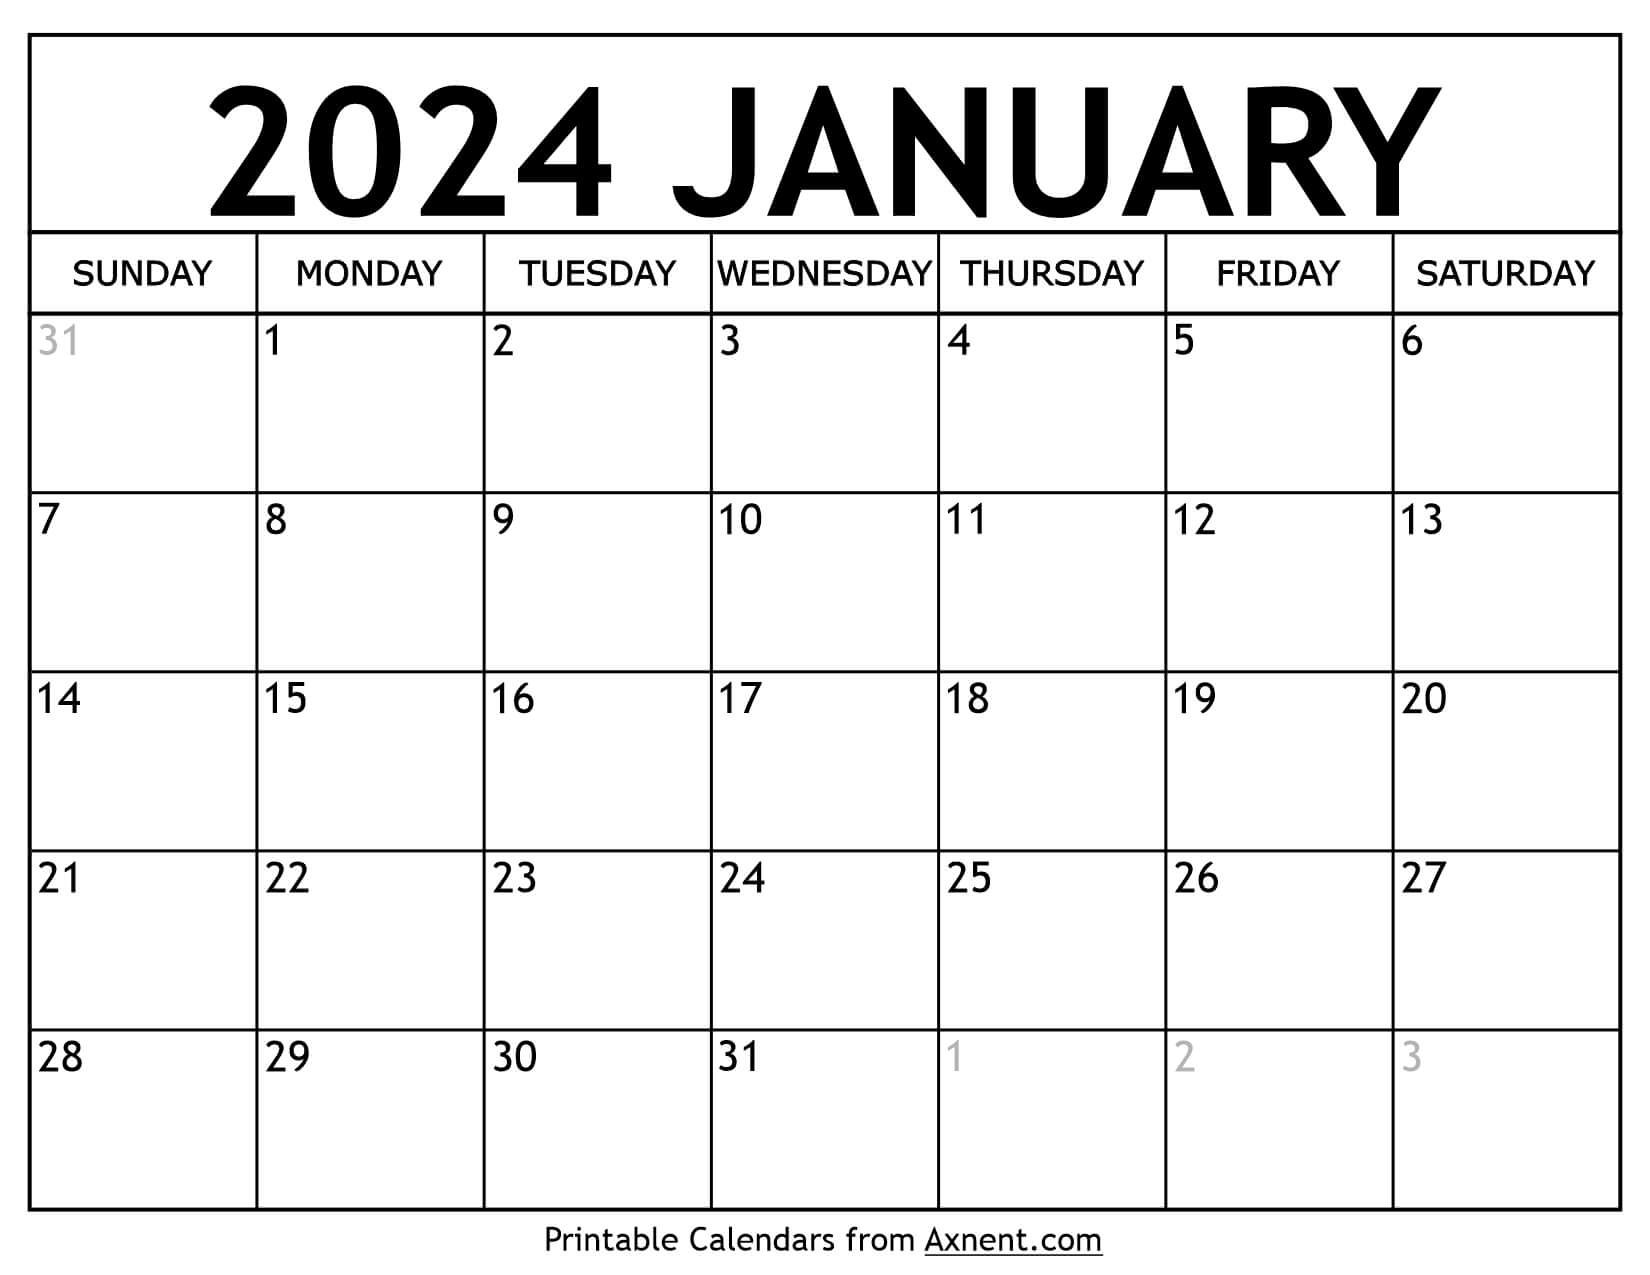 Printable January 2024 Calendar Template - Print Now for Free Printable January 2024 Calendar Page